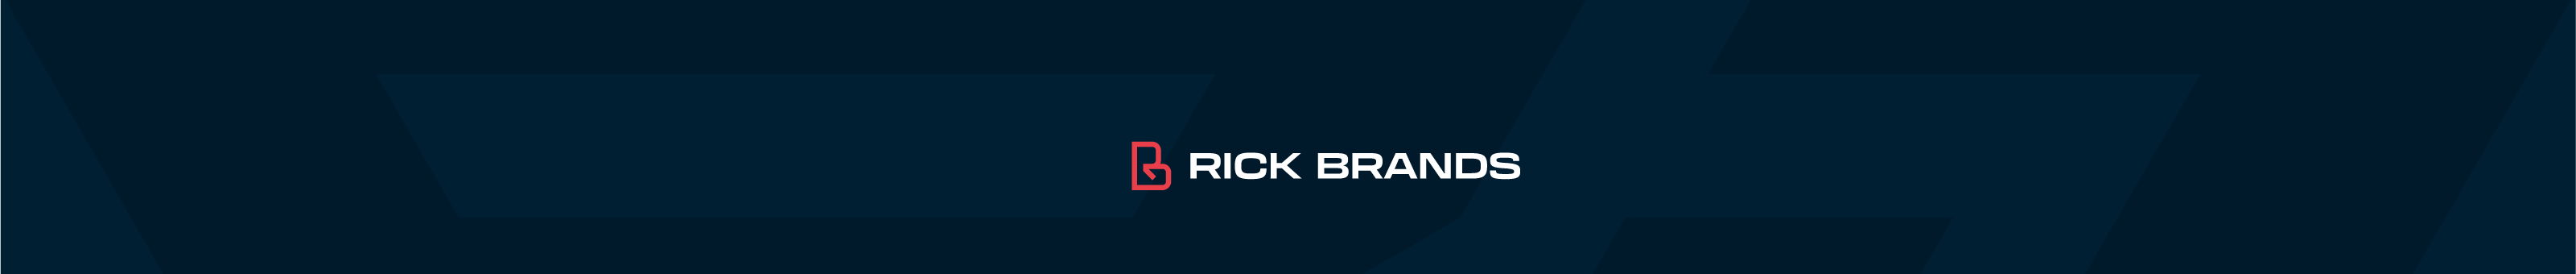 Rick Brandss profilbanner